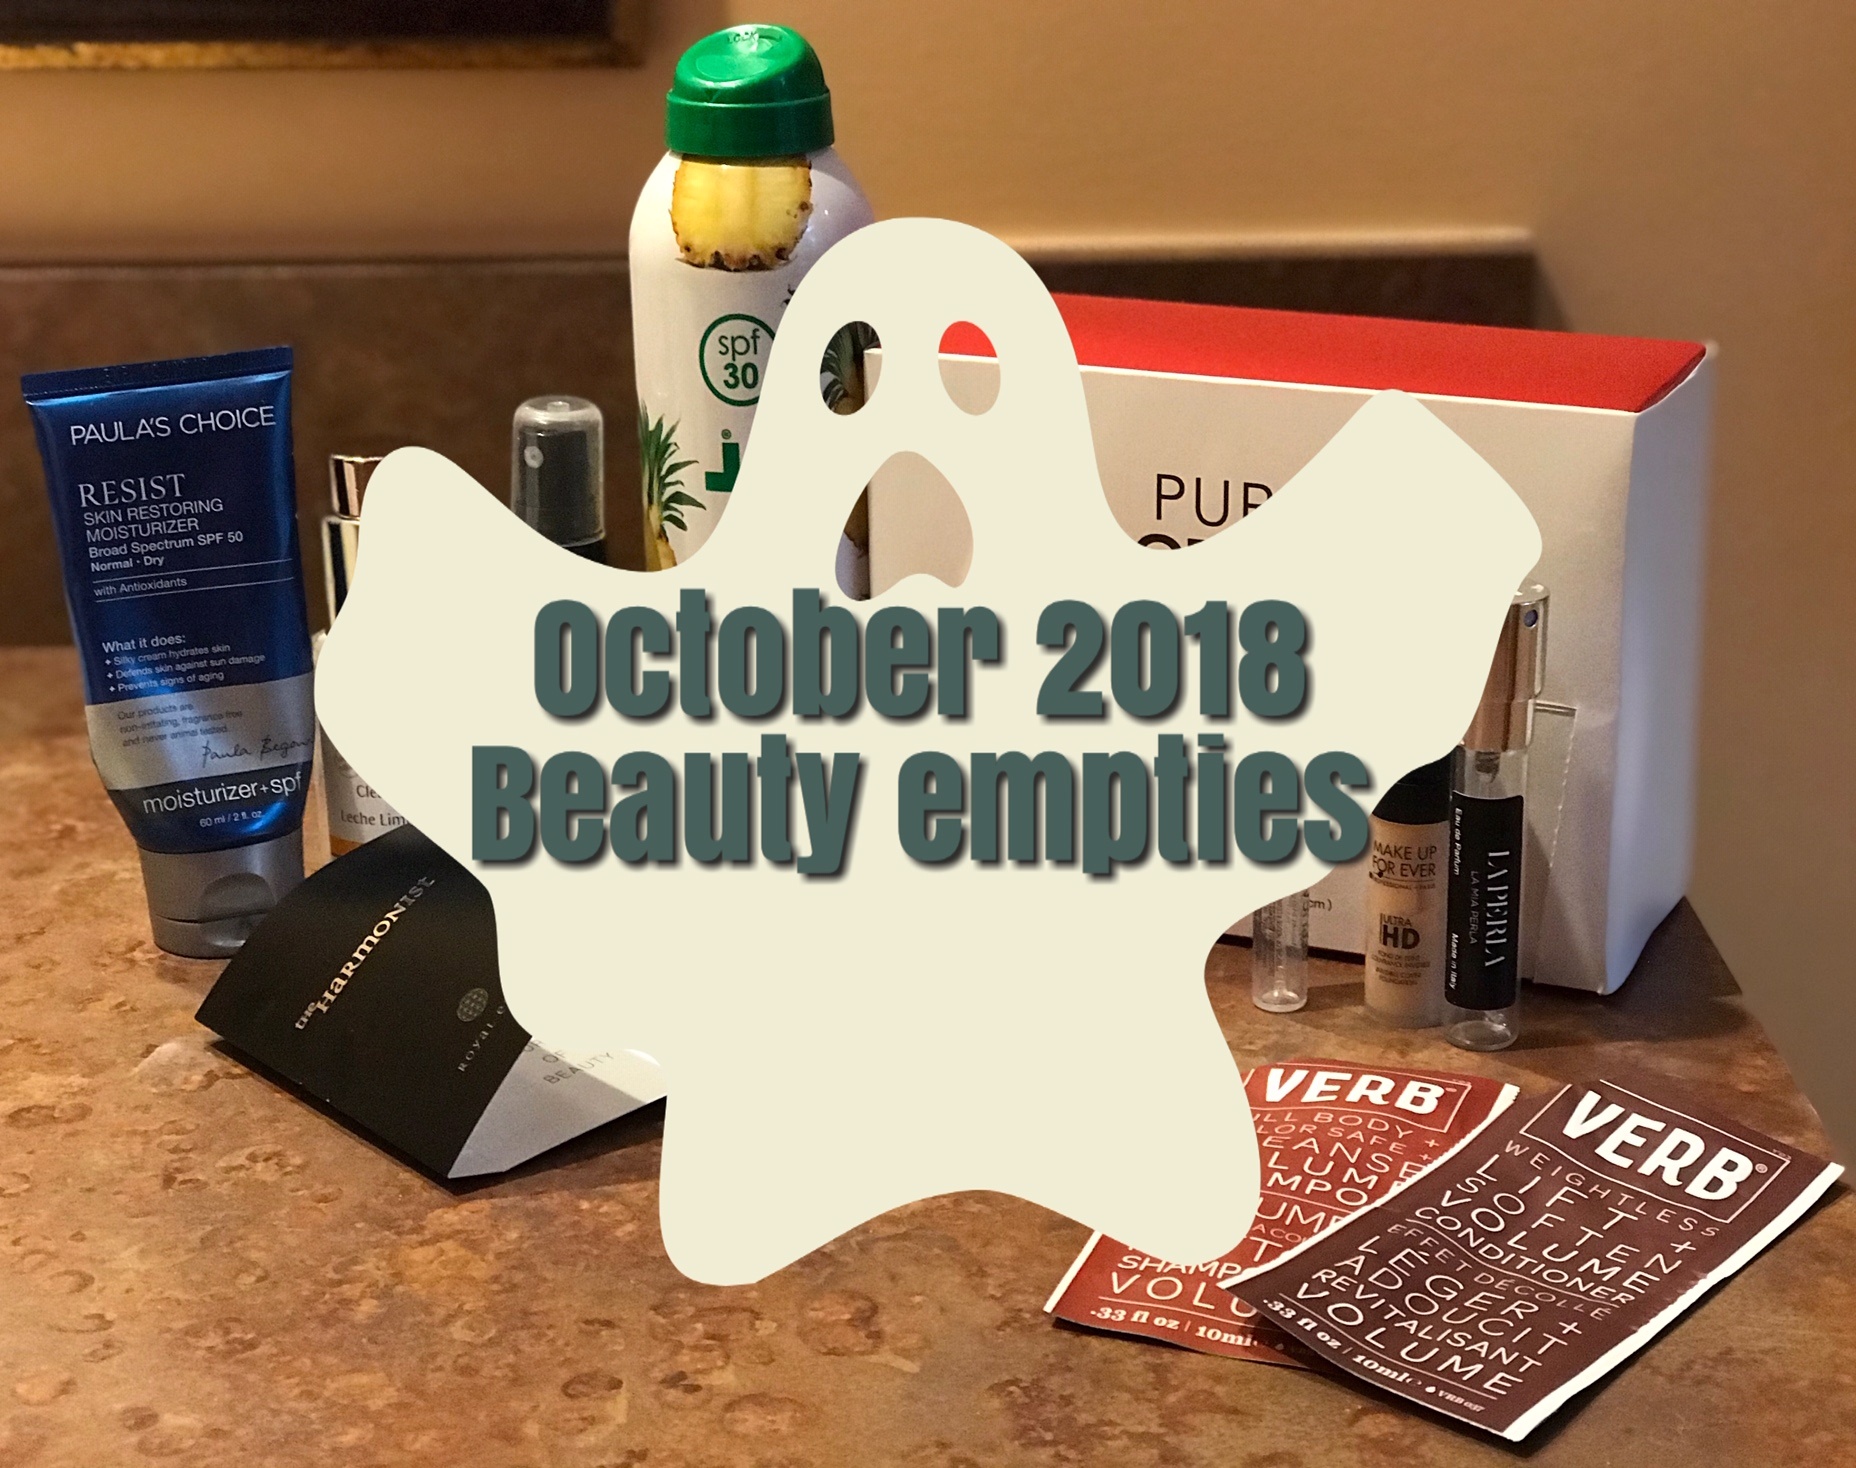 October 2018 empty beauty products, neversaydiebeauty.com